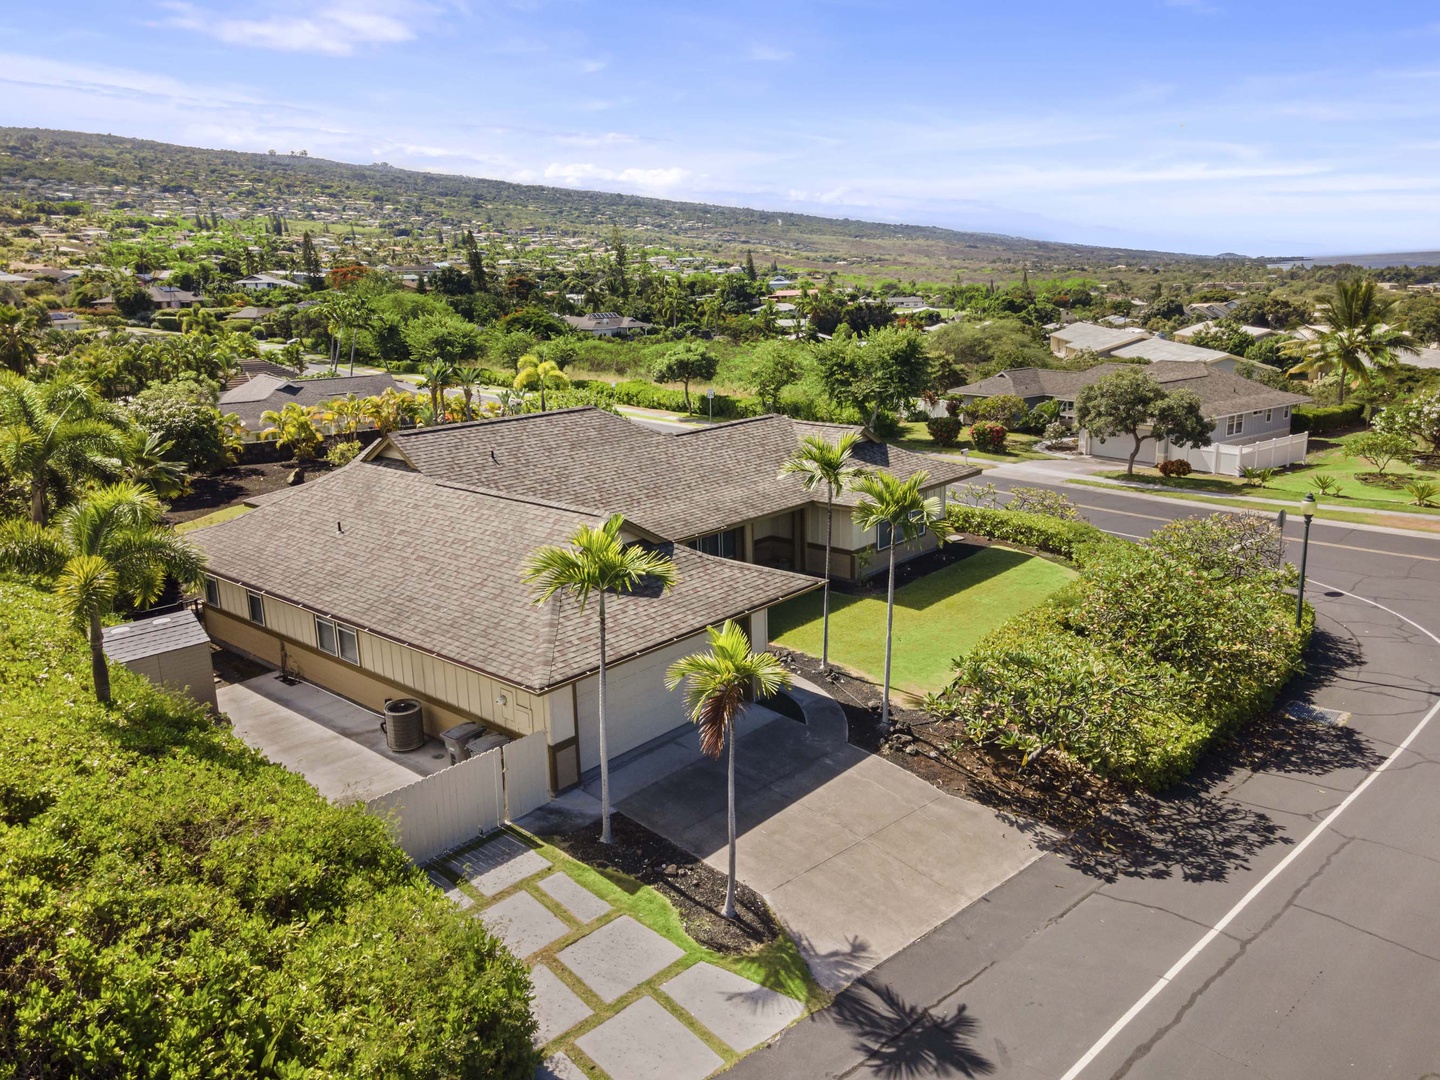 Kailua Kona Vacation Rentals, Kahakai Estates Hale - Elevated perspective of the home